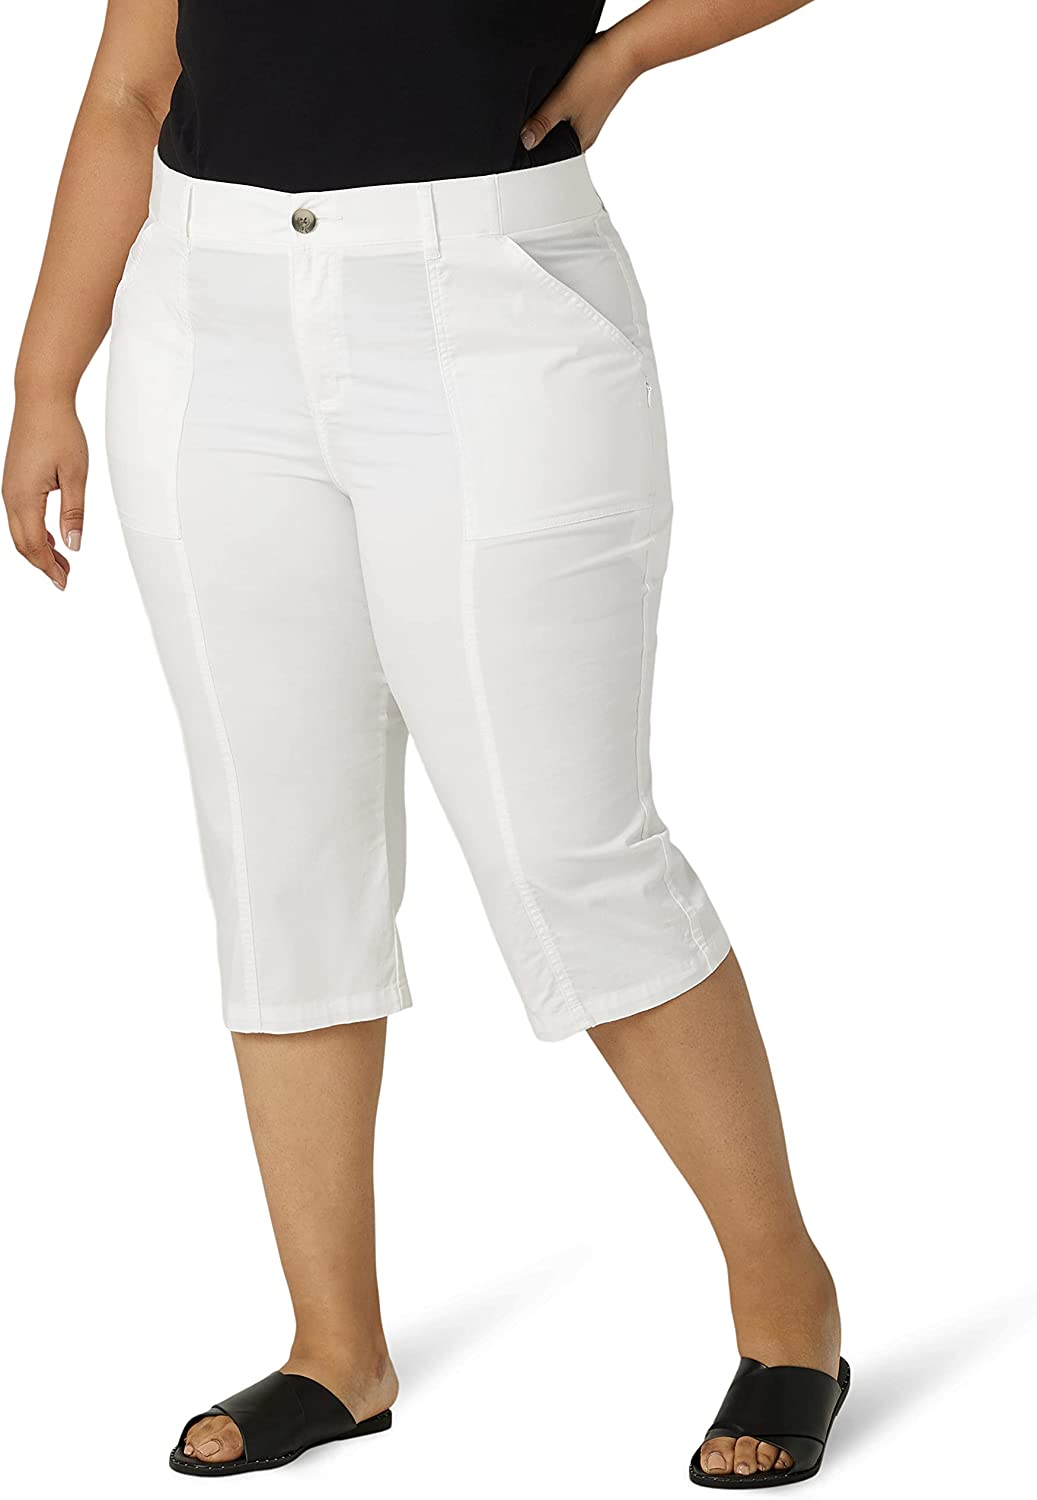 Lee Women's Plus Size Flex-to-go Utility Capri Pant